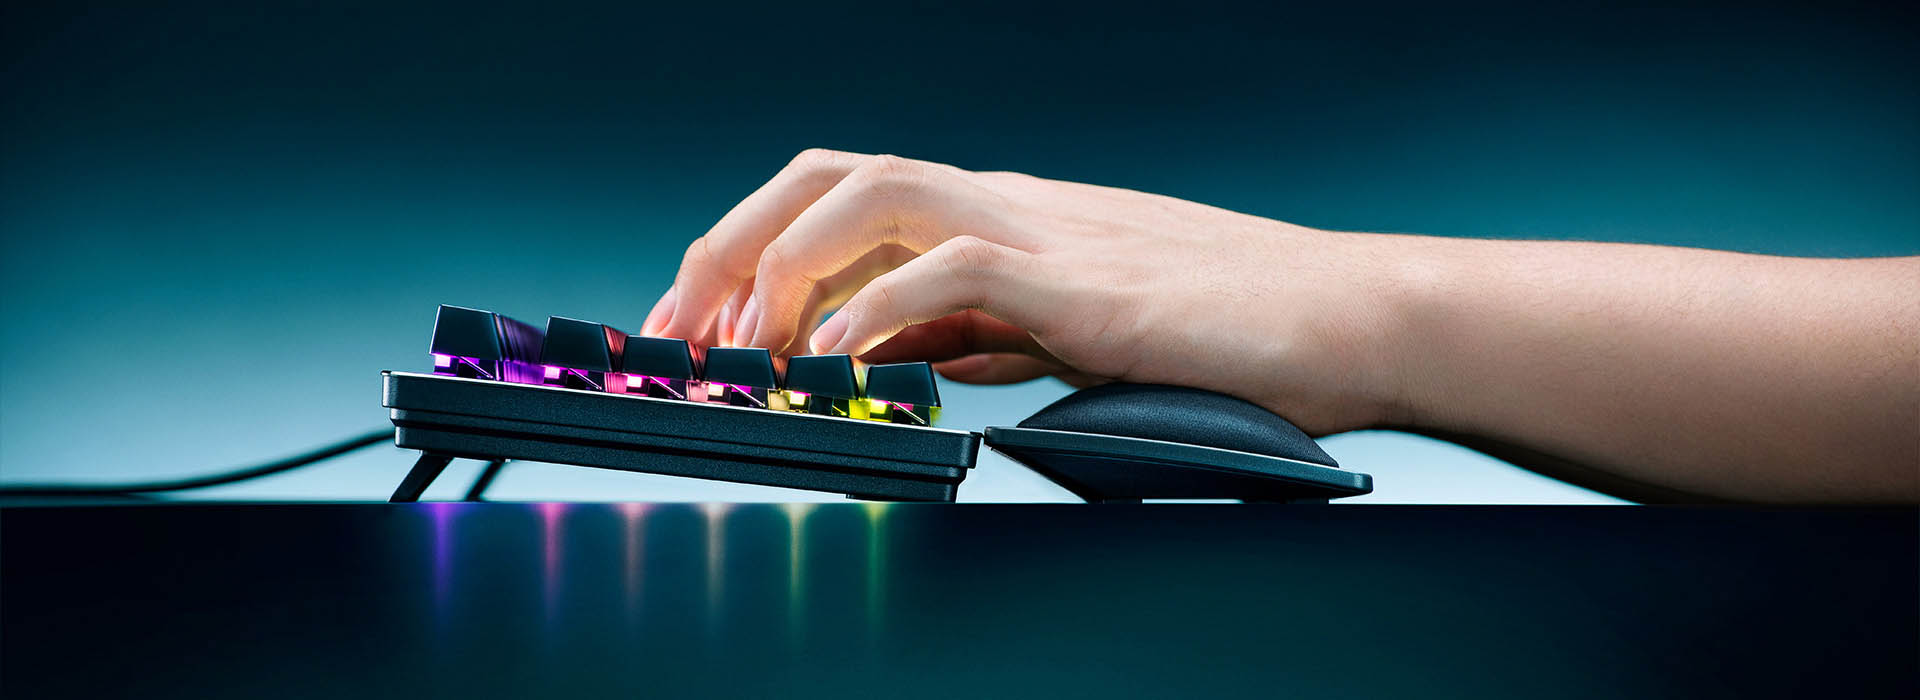 پد کیبورد ریزر مدل Razer Ergonomic Wrist Rest for Tenkeyless Keyboards